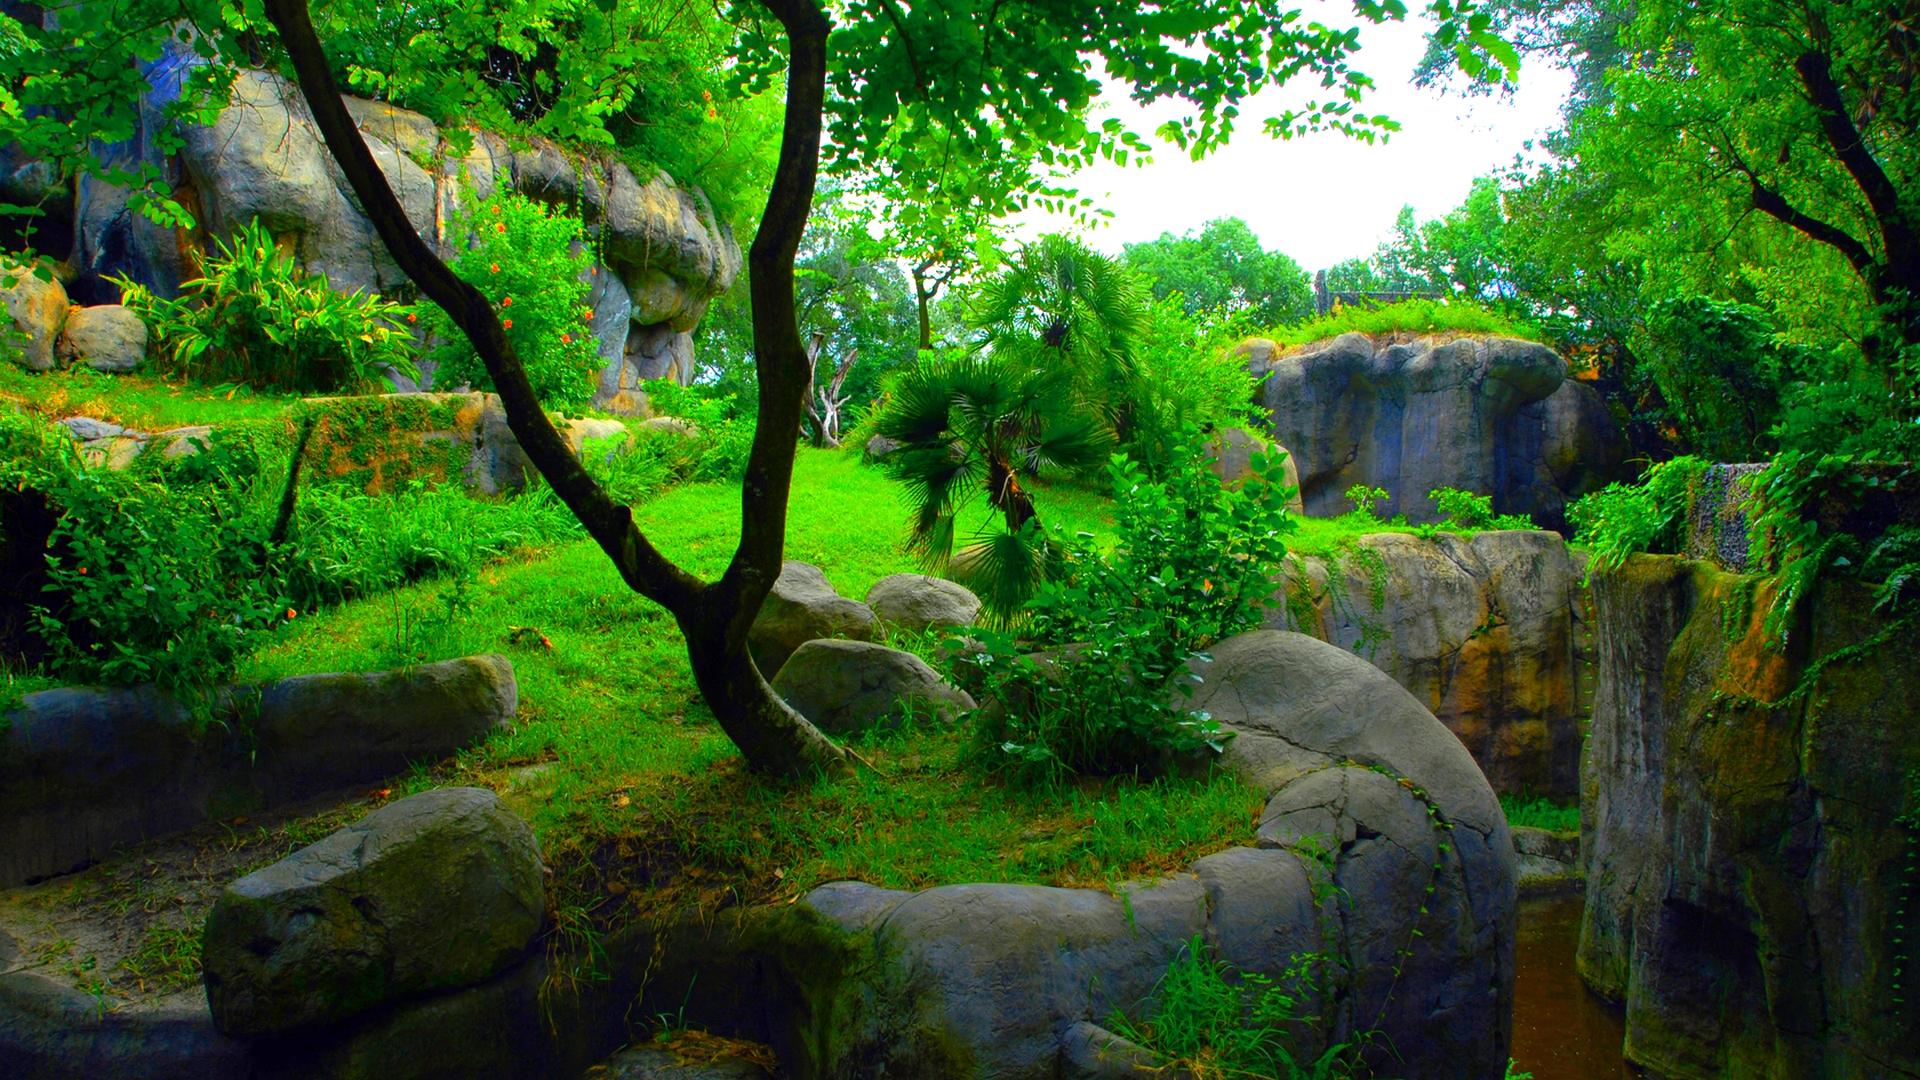 Green Background Nature Images Hd - 1080p HD Image Nature | PixelsTalk